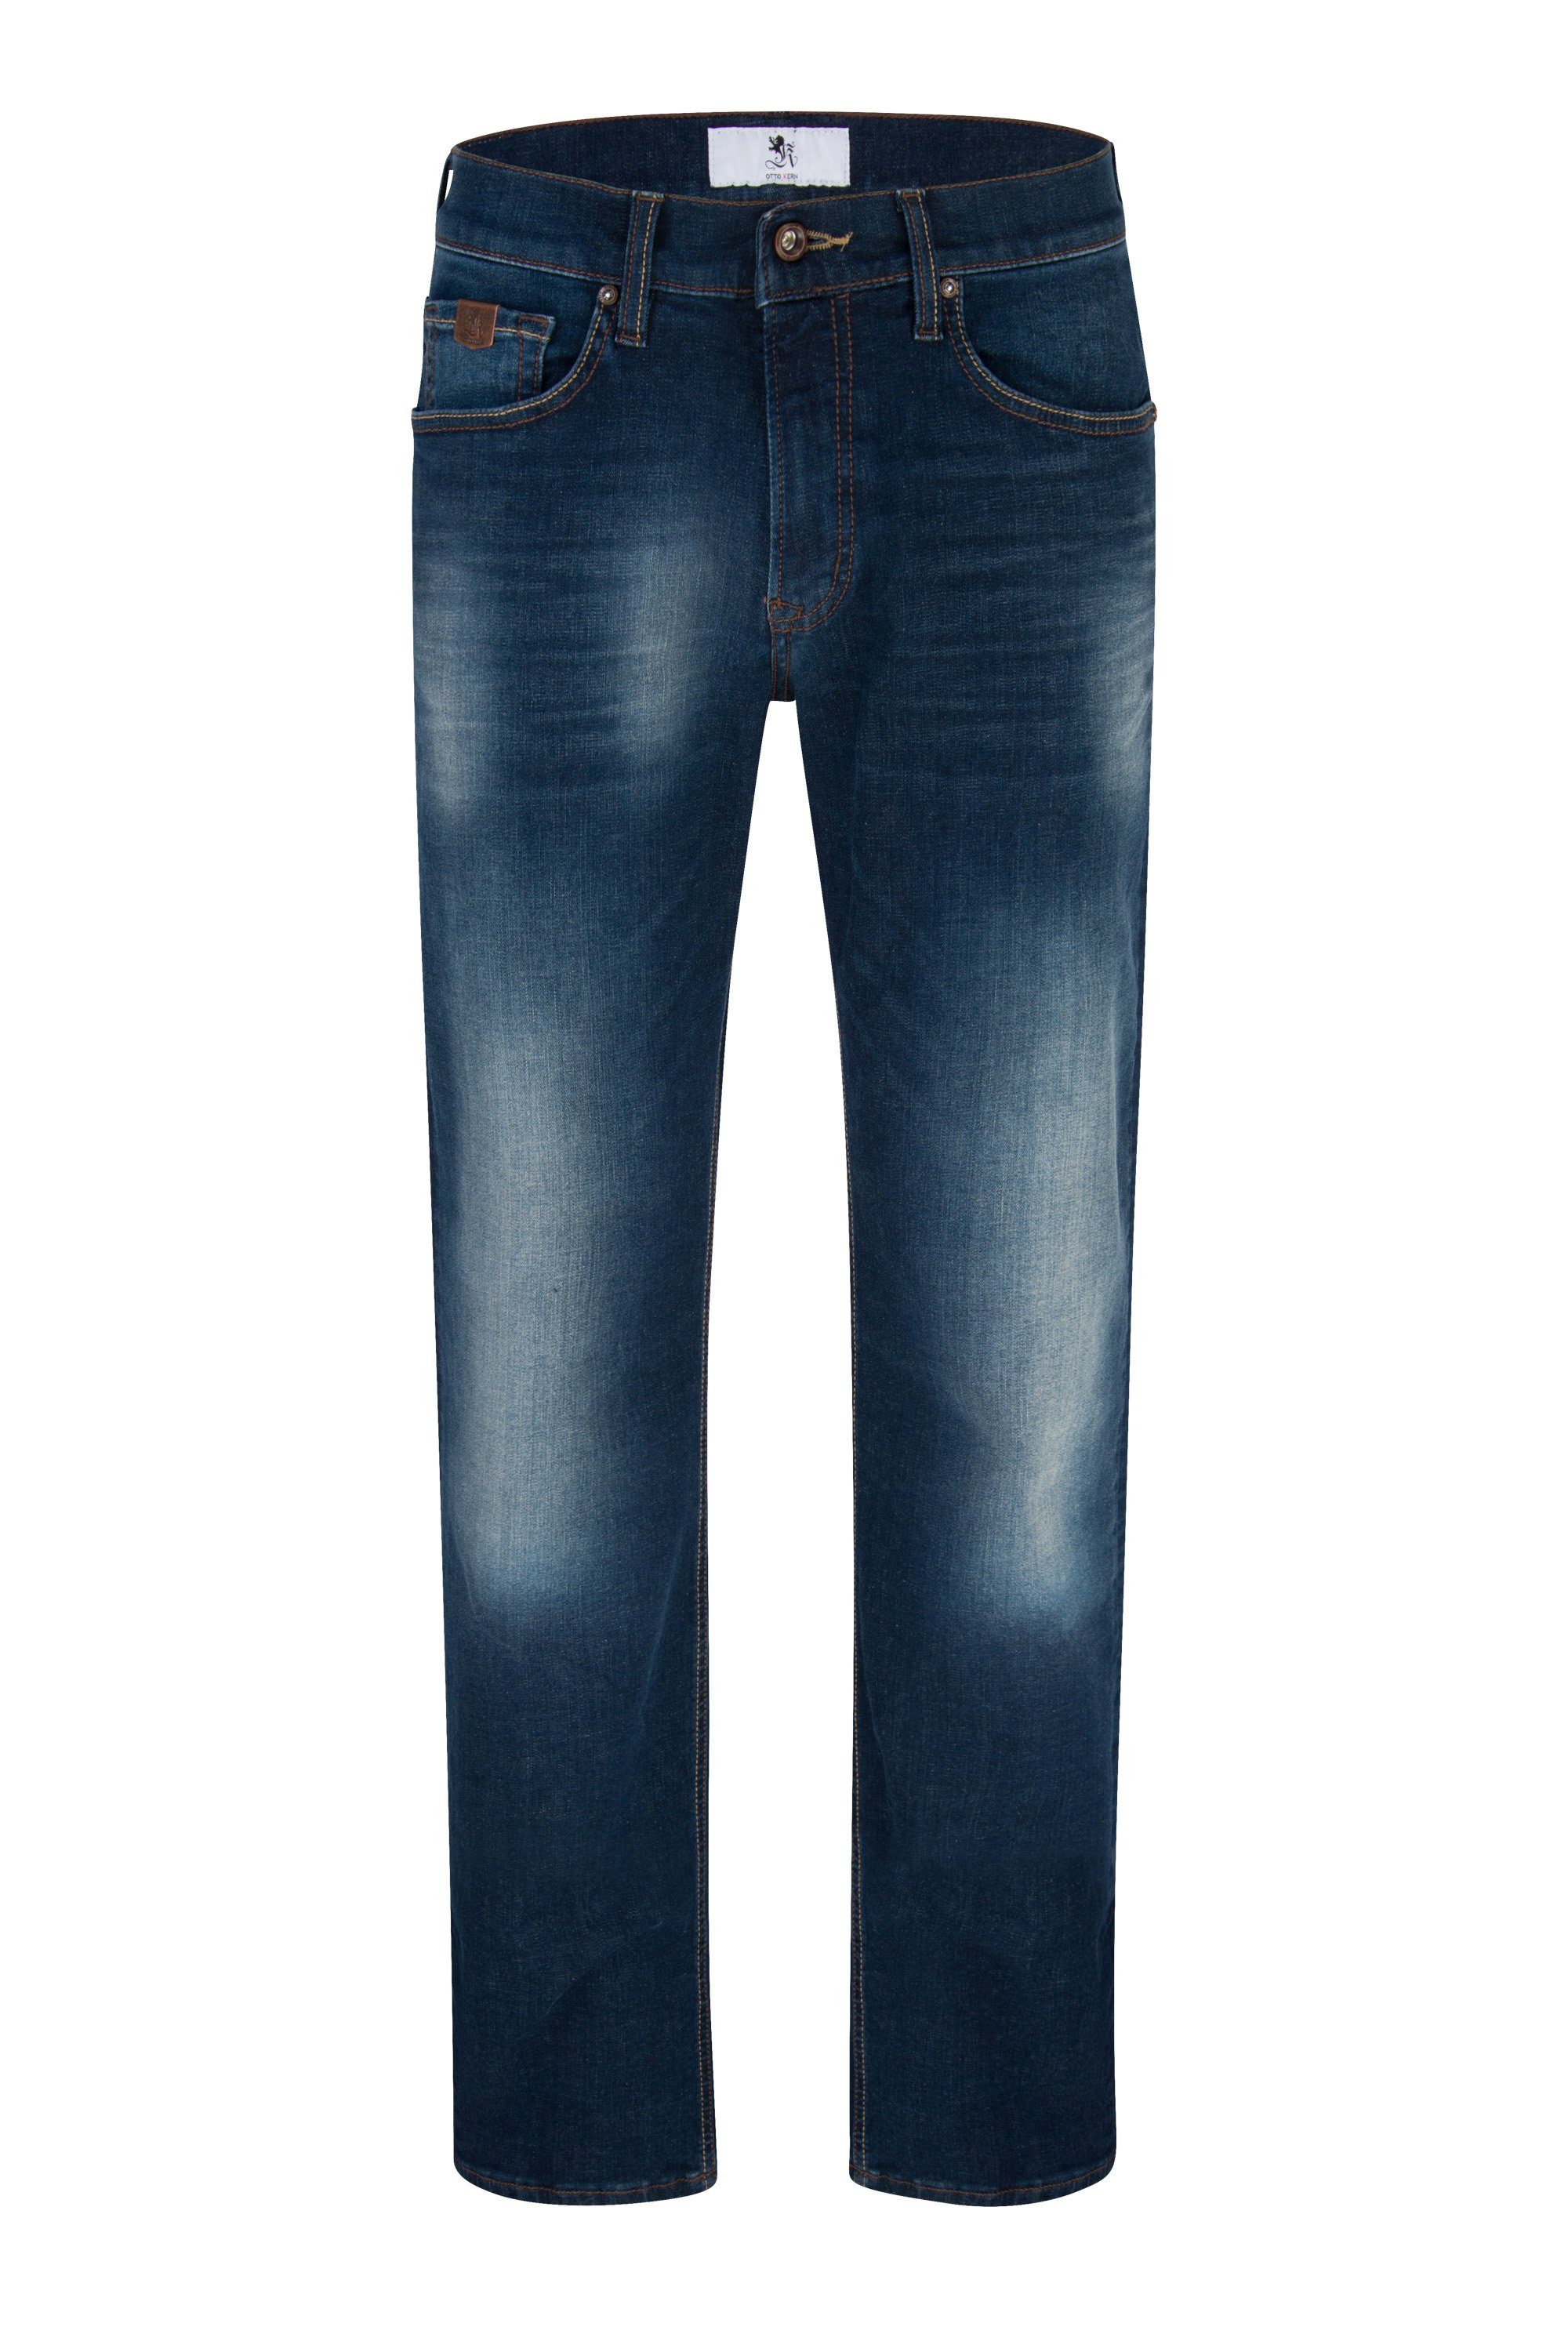 Herren Jeans Otto Kern 5-Pocket-Jeans OTTO KERN RAY dark blue used buffies 67001 6831.68